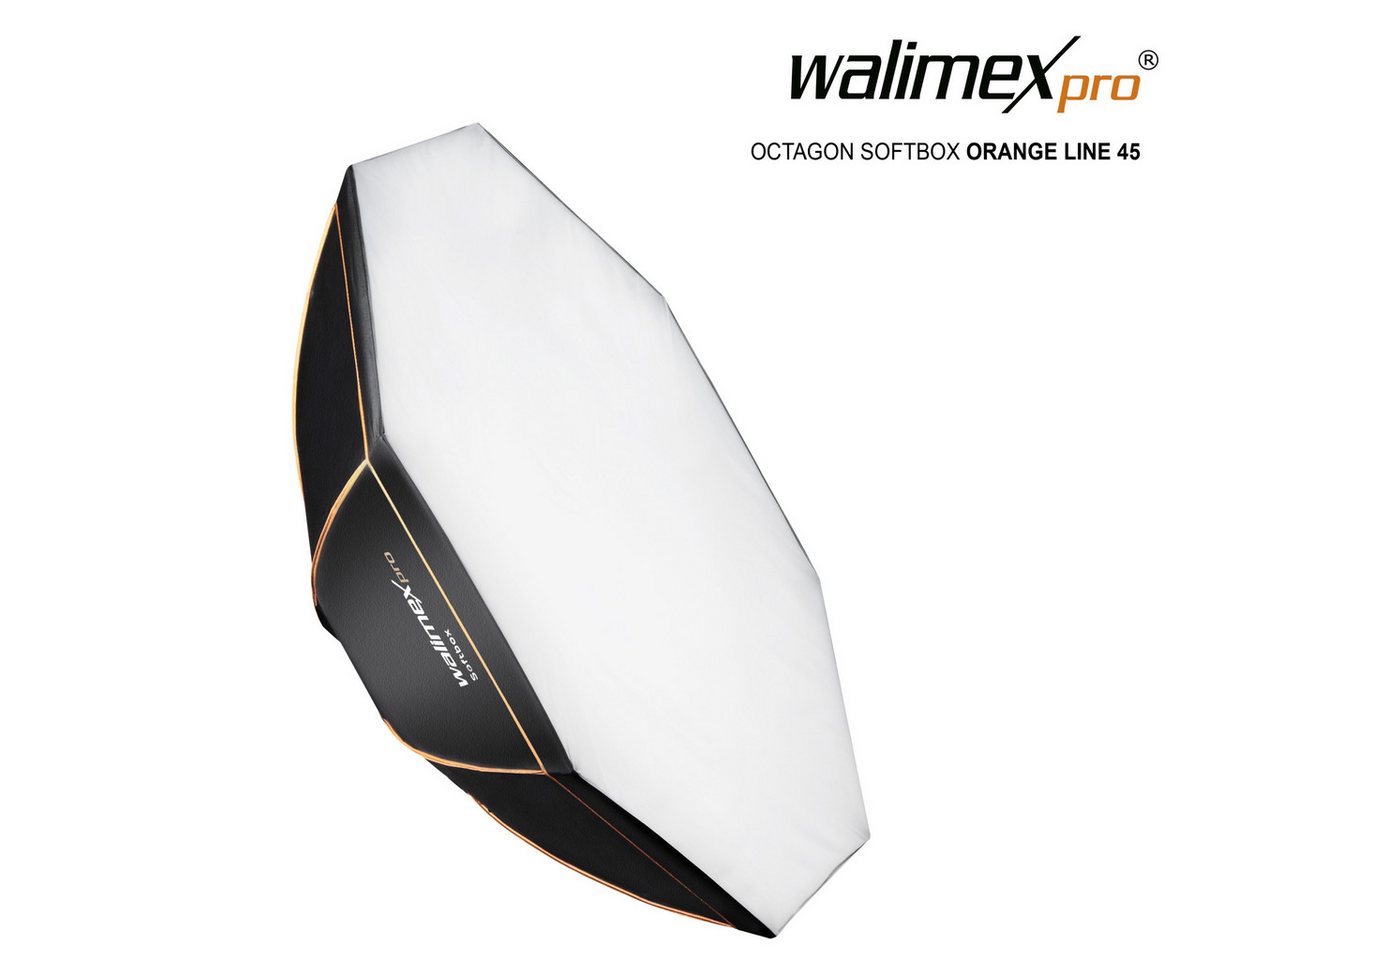 Walimex Pro Softbox Octagon Softbox Orange Line 45 von Walimex Pro